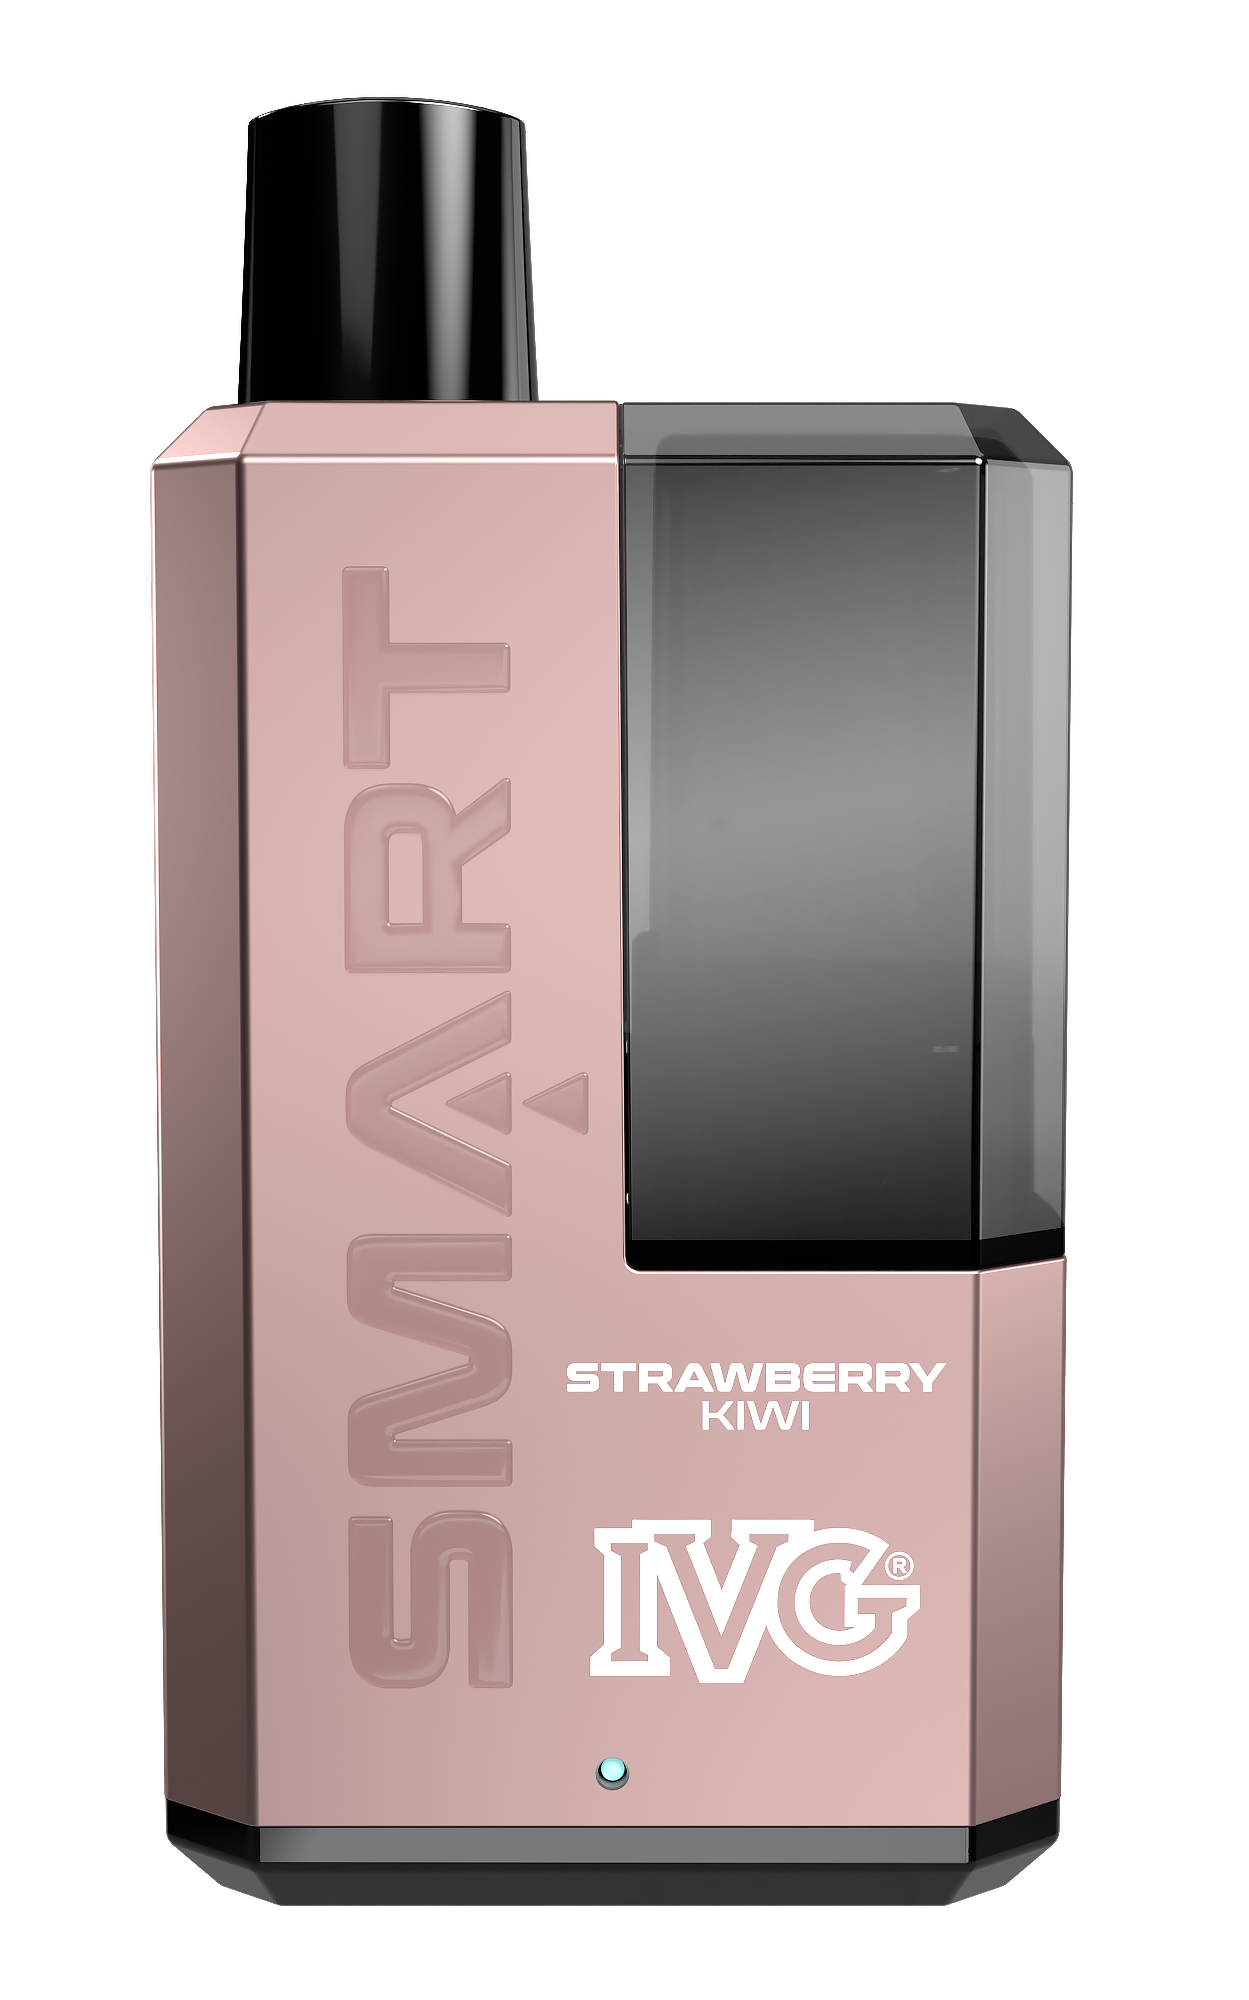 IVG Smart Strawberry Kiwi 5 Pcs